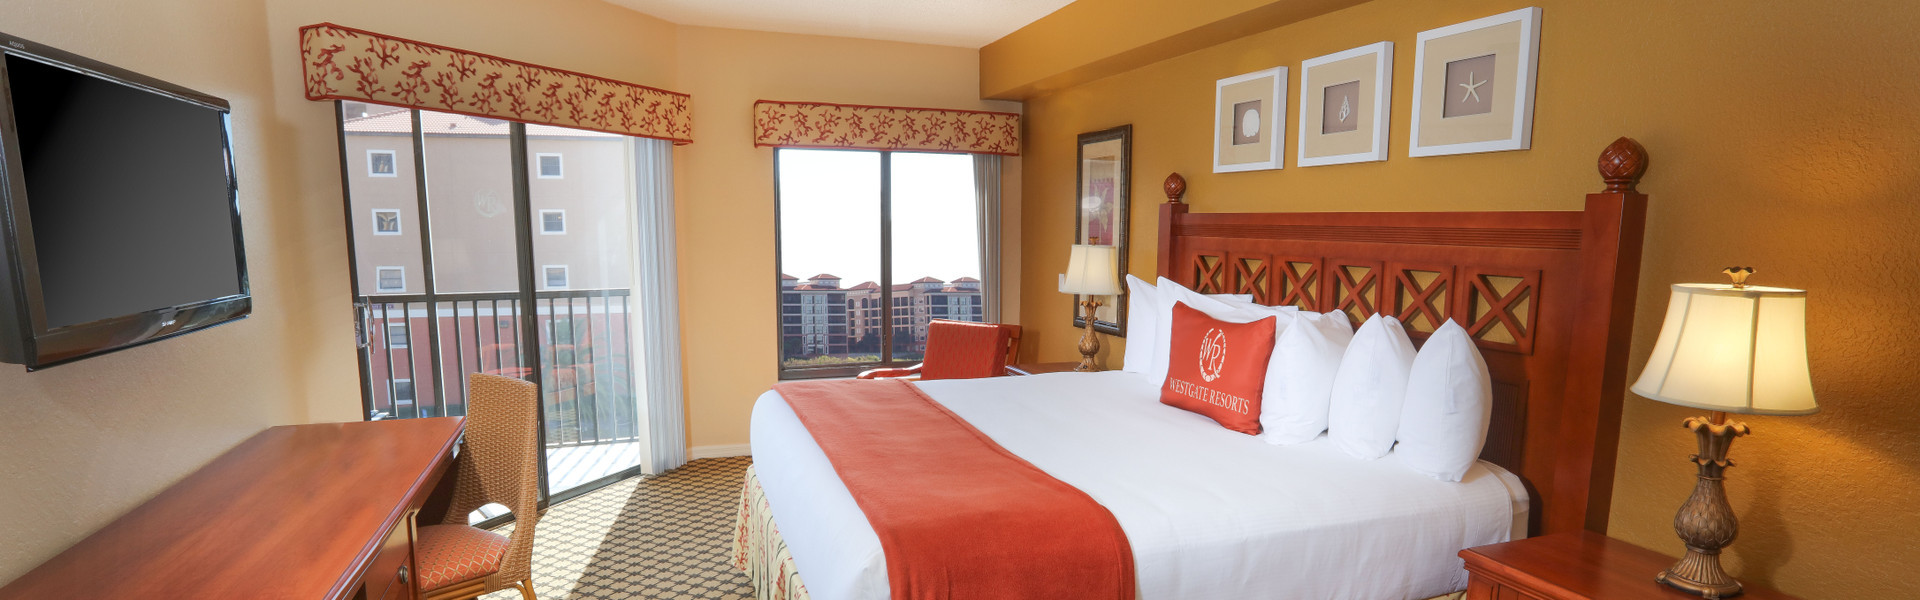 3 Bedroom Suites Orlando Fl Westgate Lakes Resort Spa In